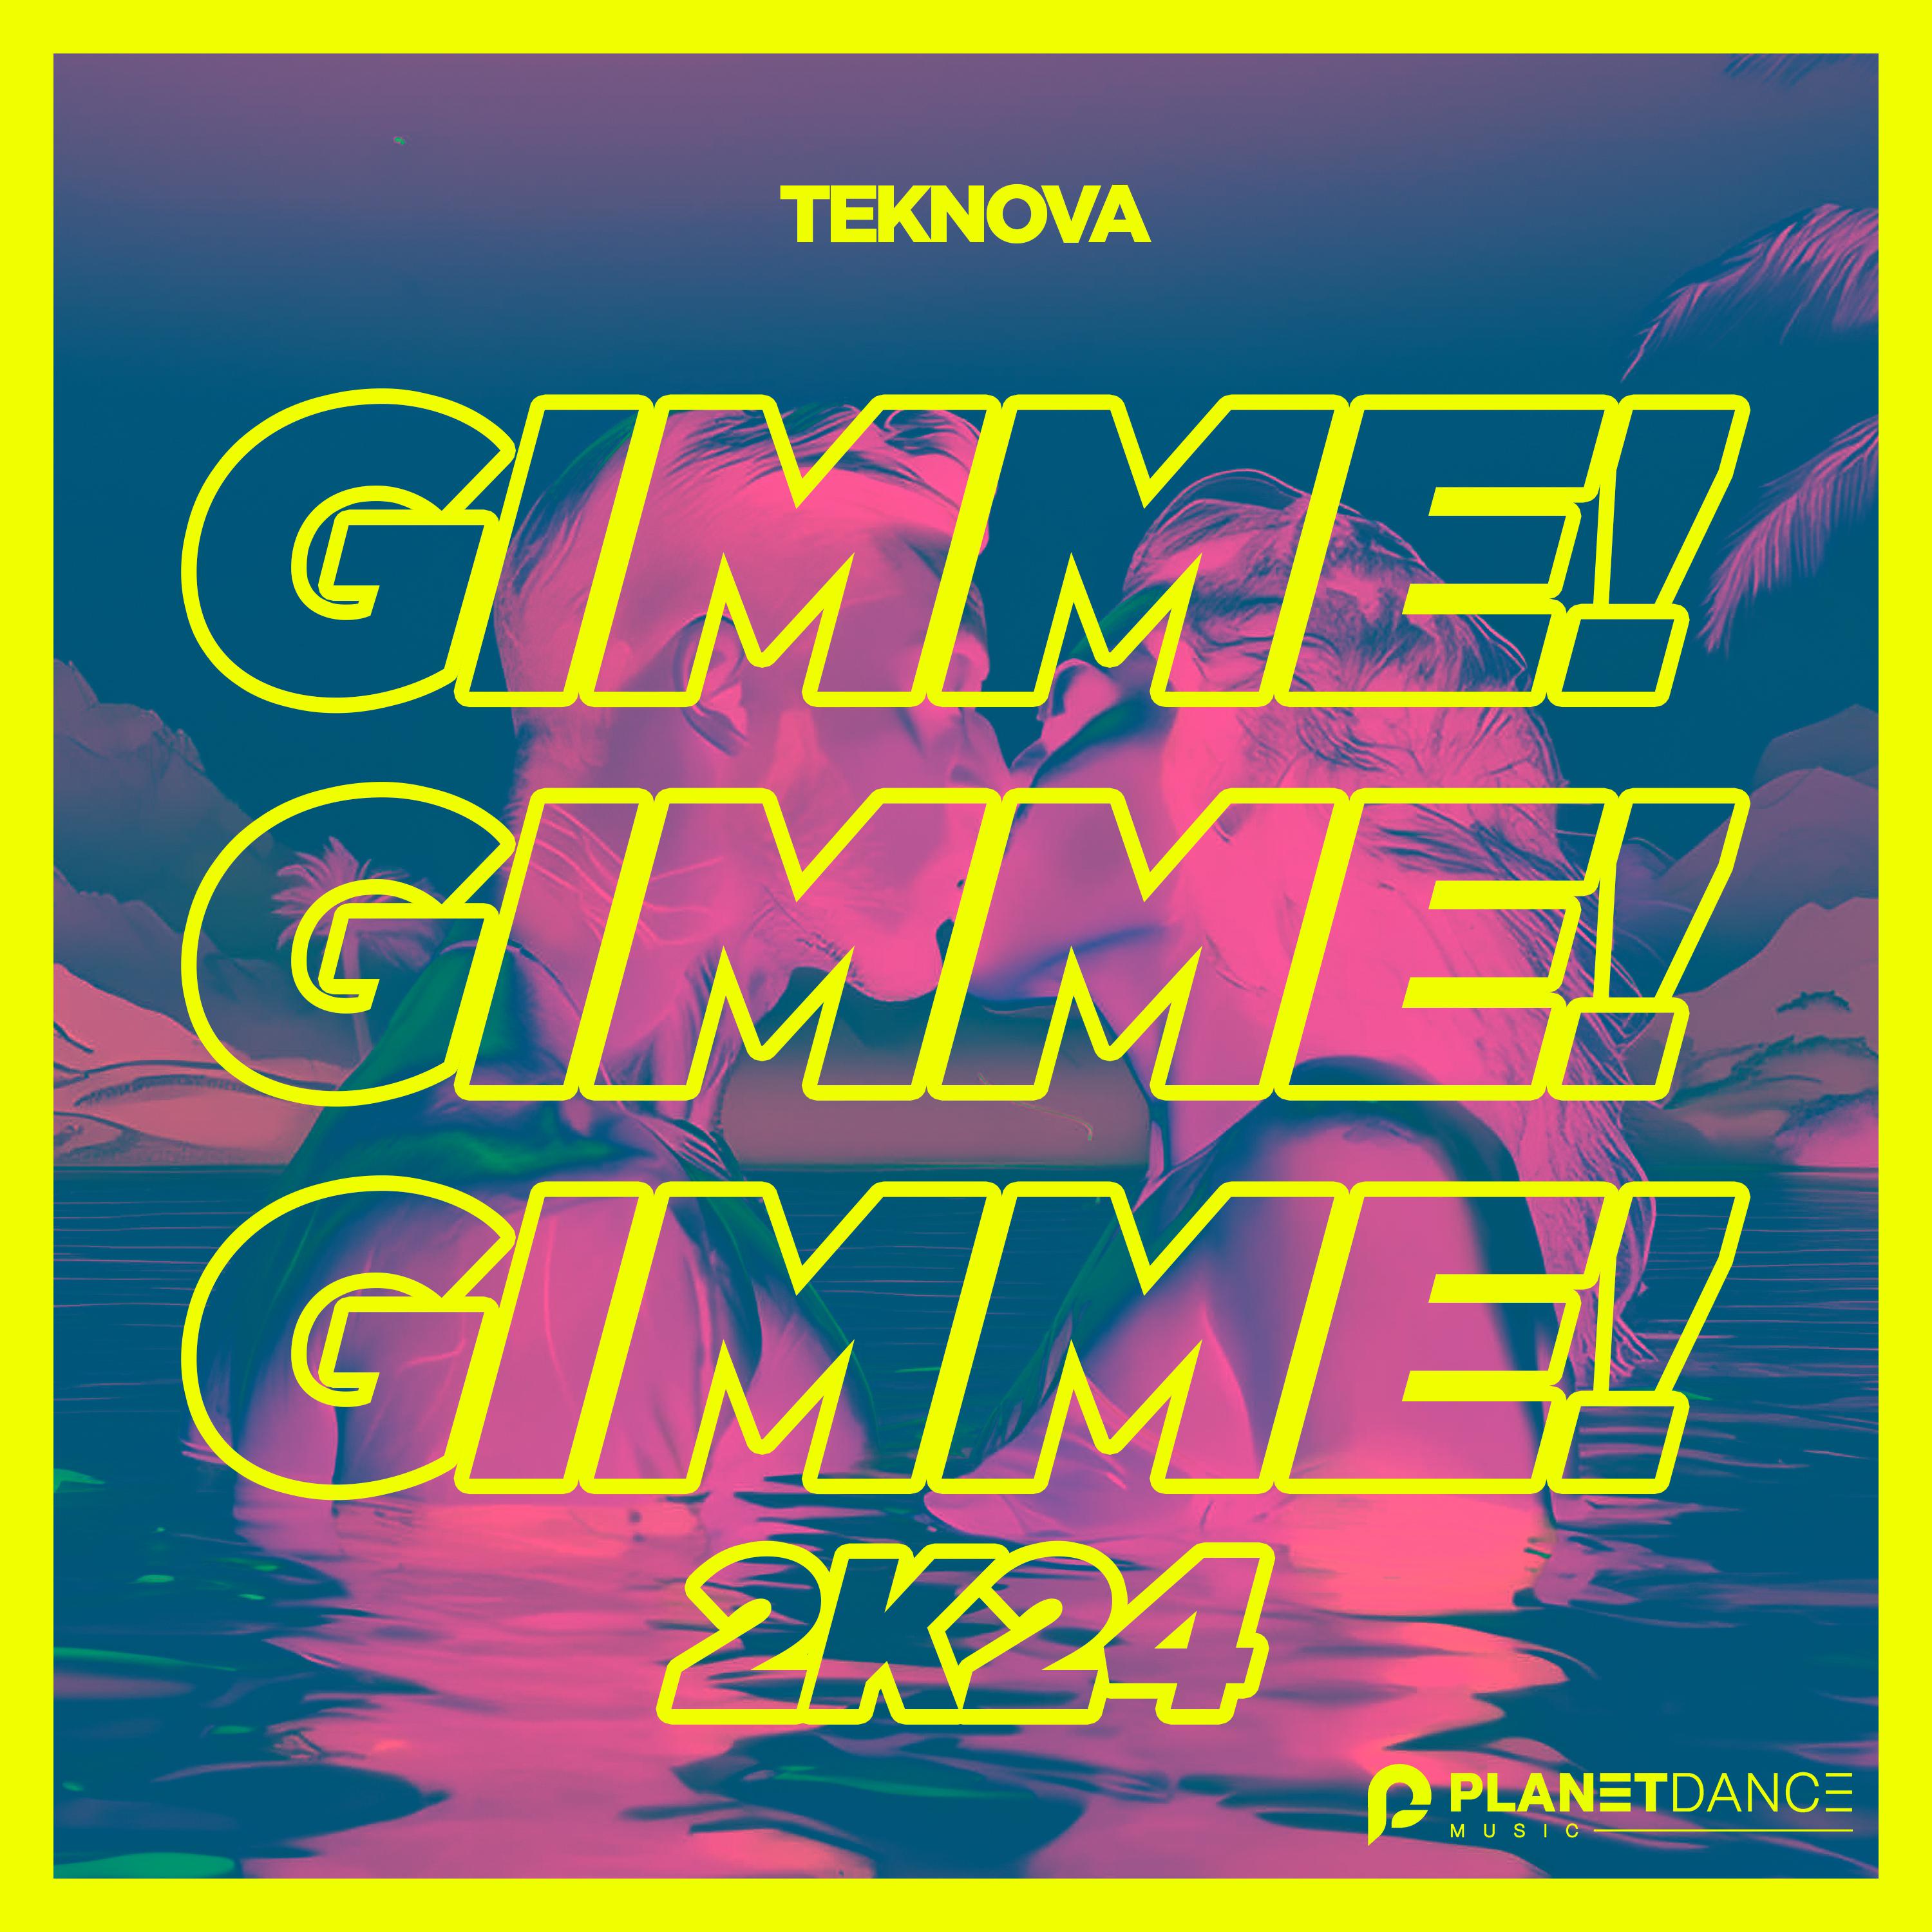 Teknova - Gimme! Gimme! Gimme! 2k24 (Extended Mix)